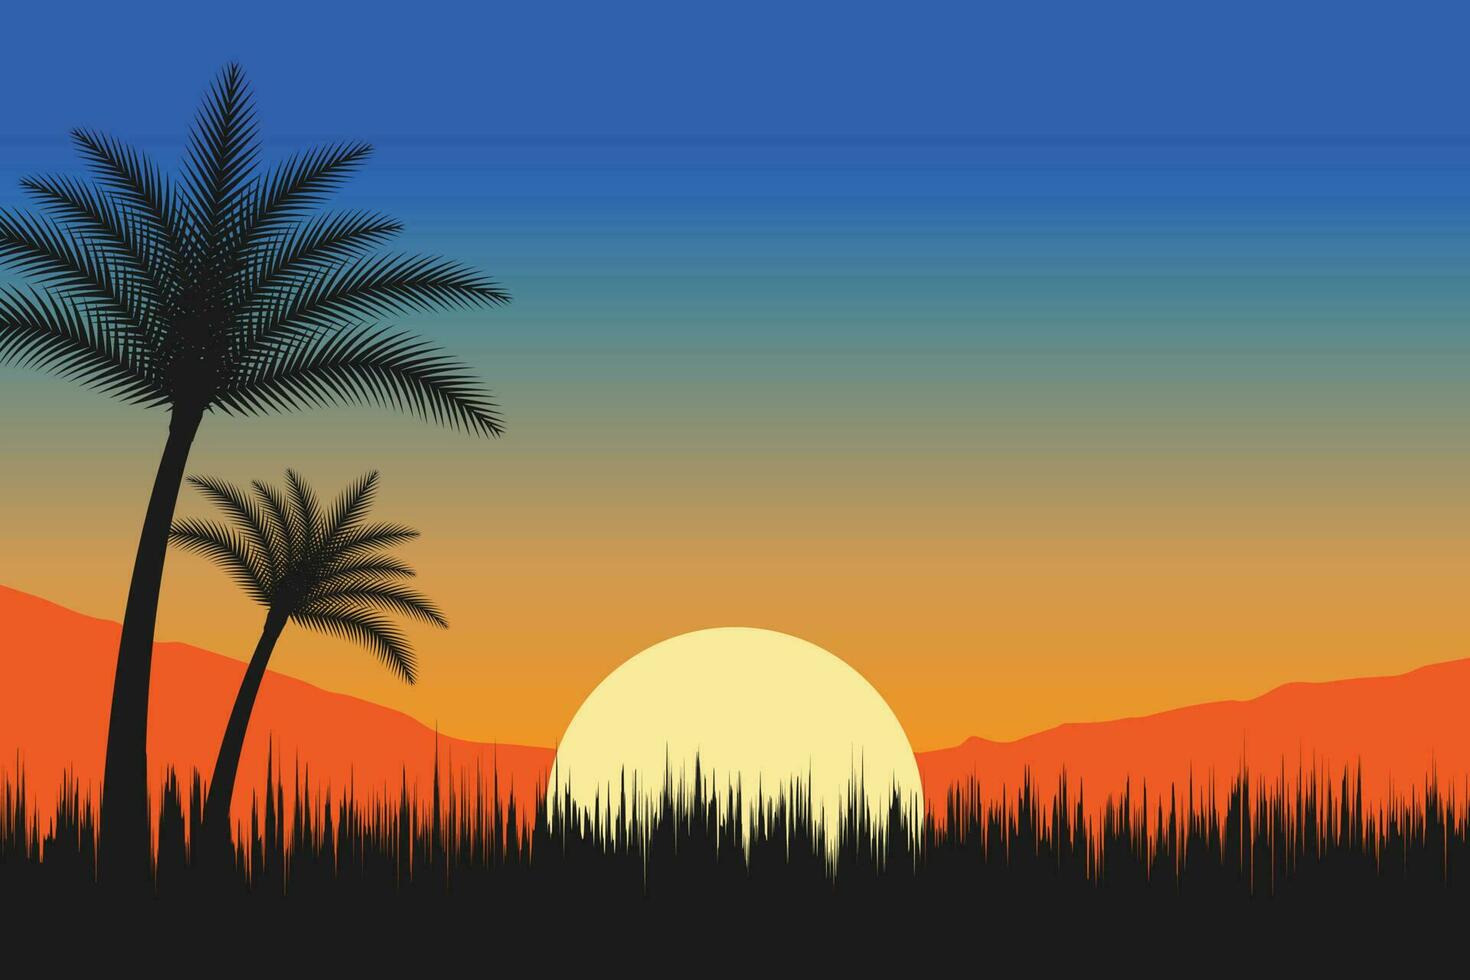 summer Sunset beach vector background, Sunset scene landscape background, tropical beach landscape illustration, Sunset beach with palm trees vector background, gradient beach scenery background